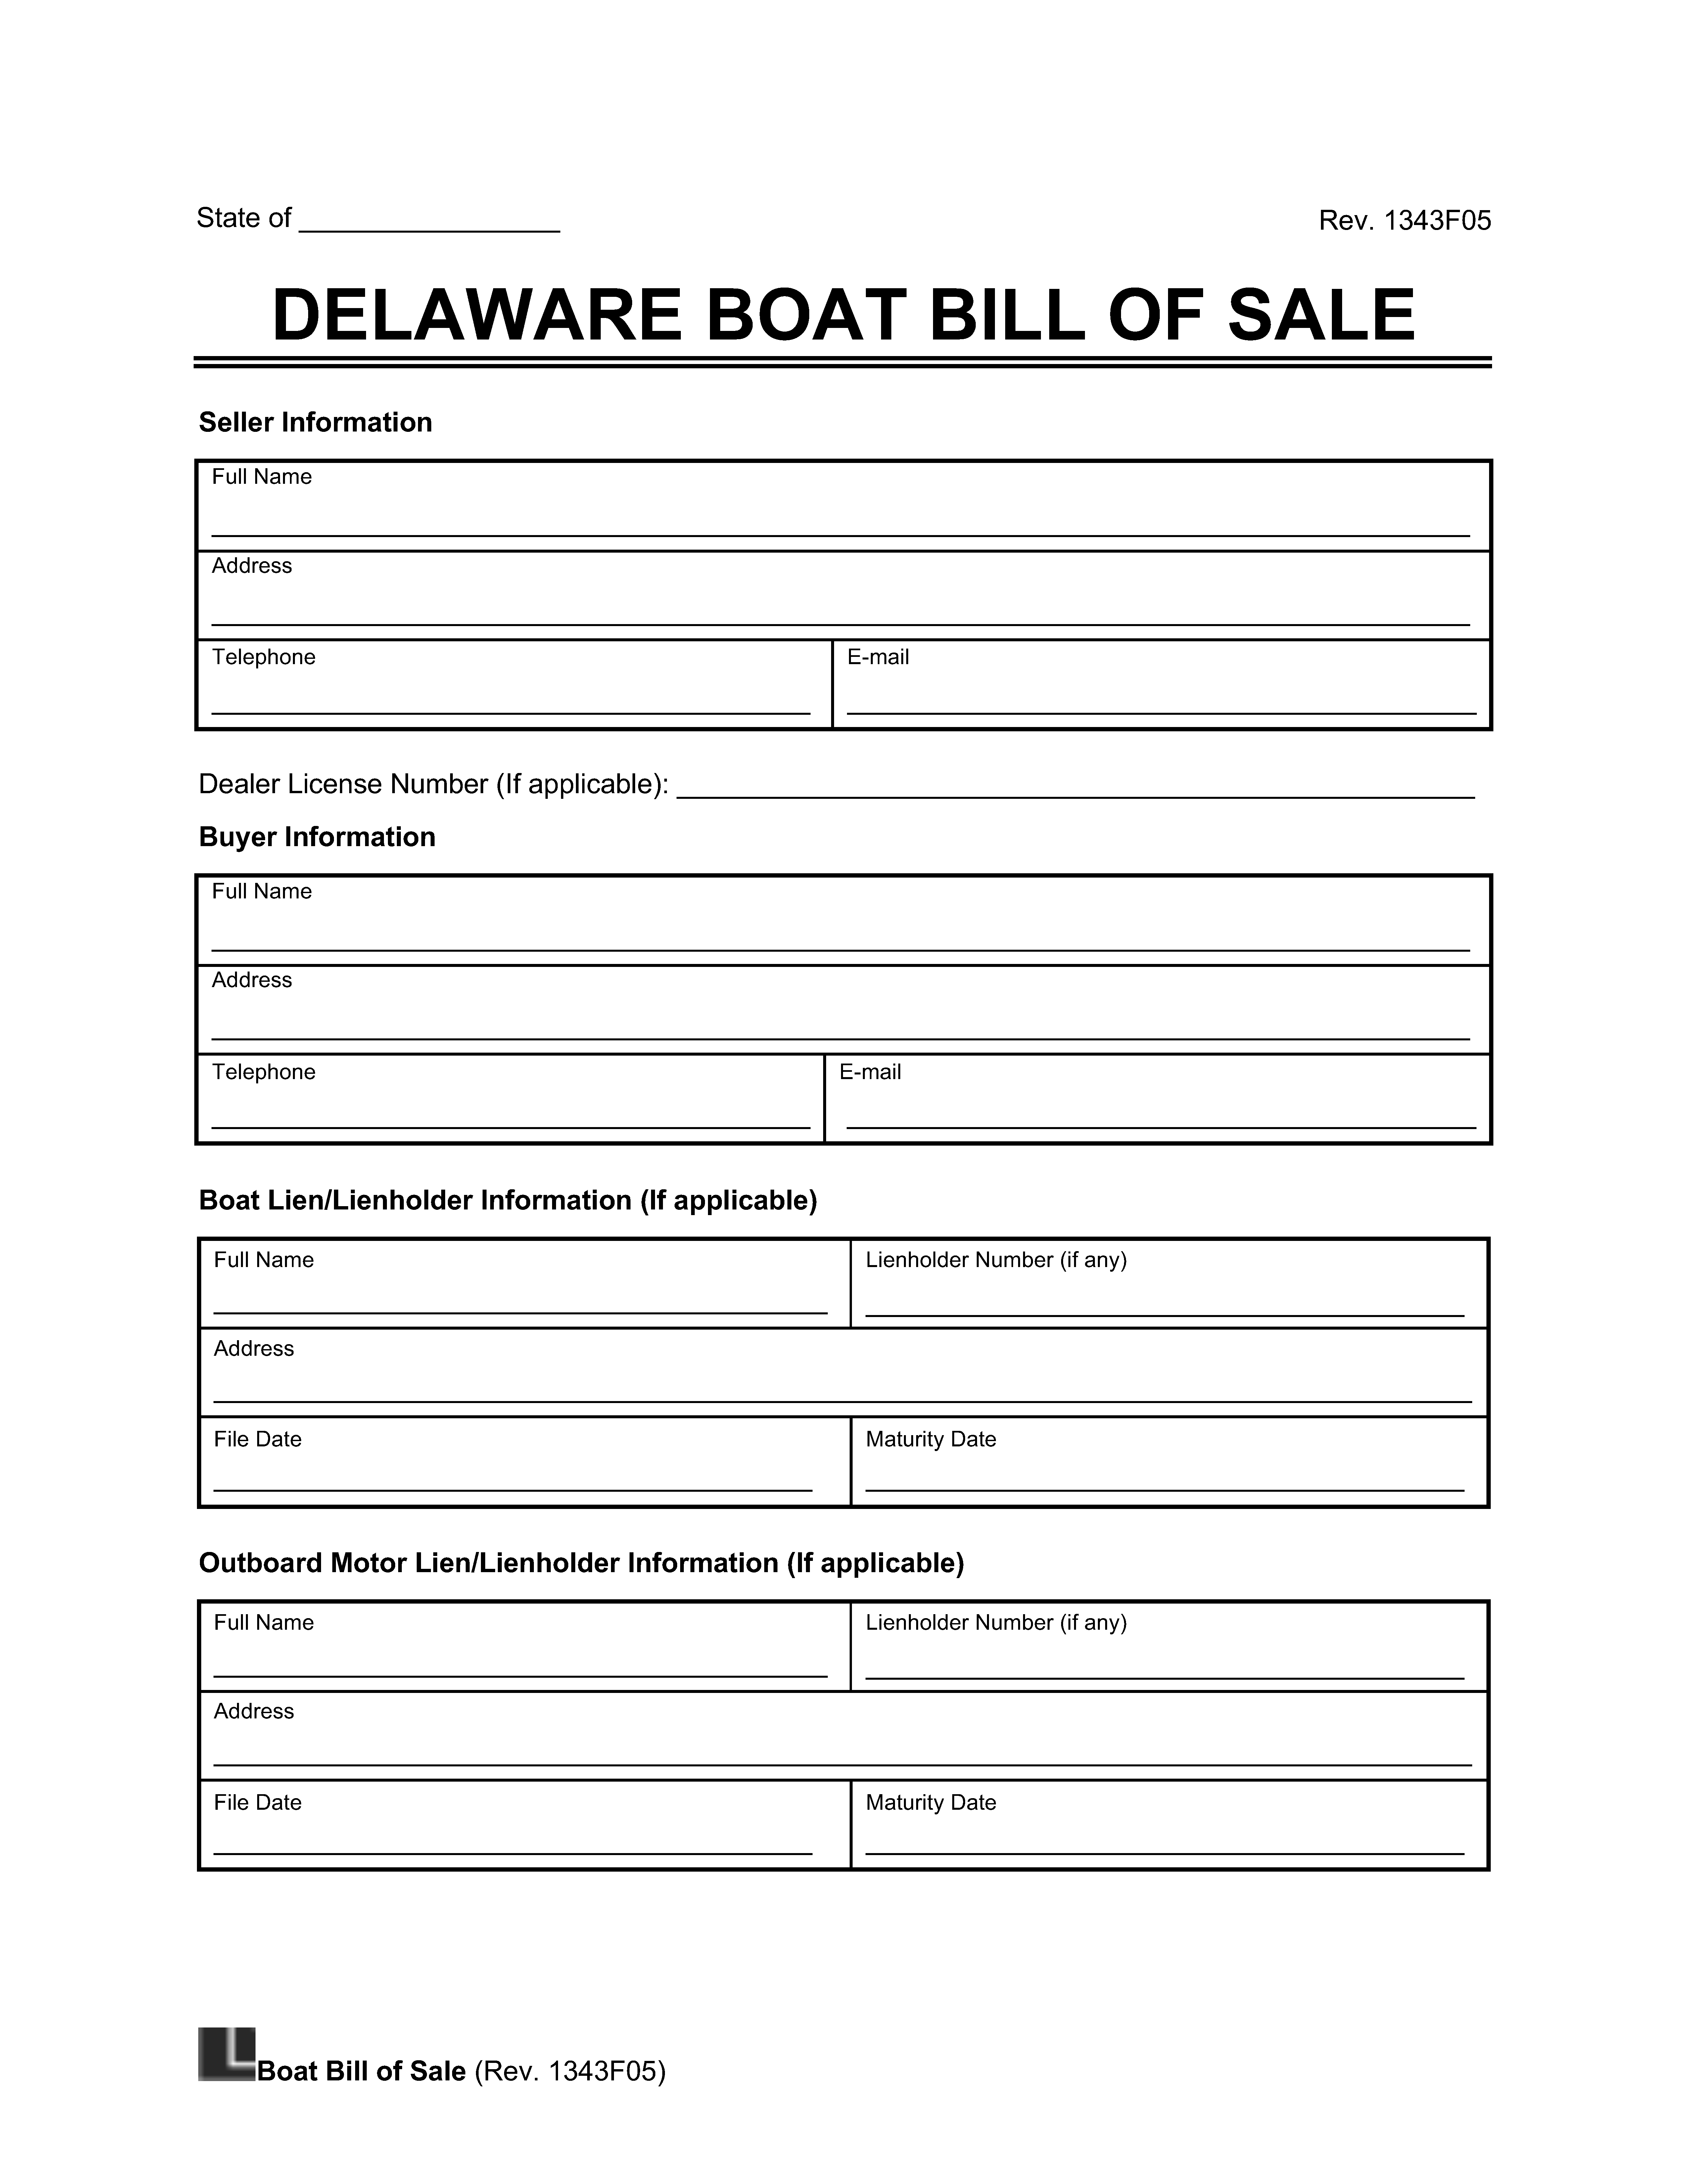 Boat Bill of Sale Delaware screenshot